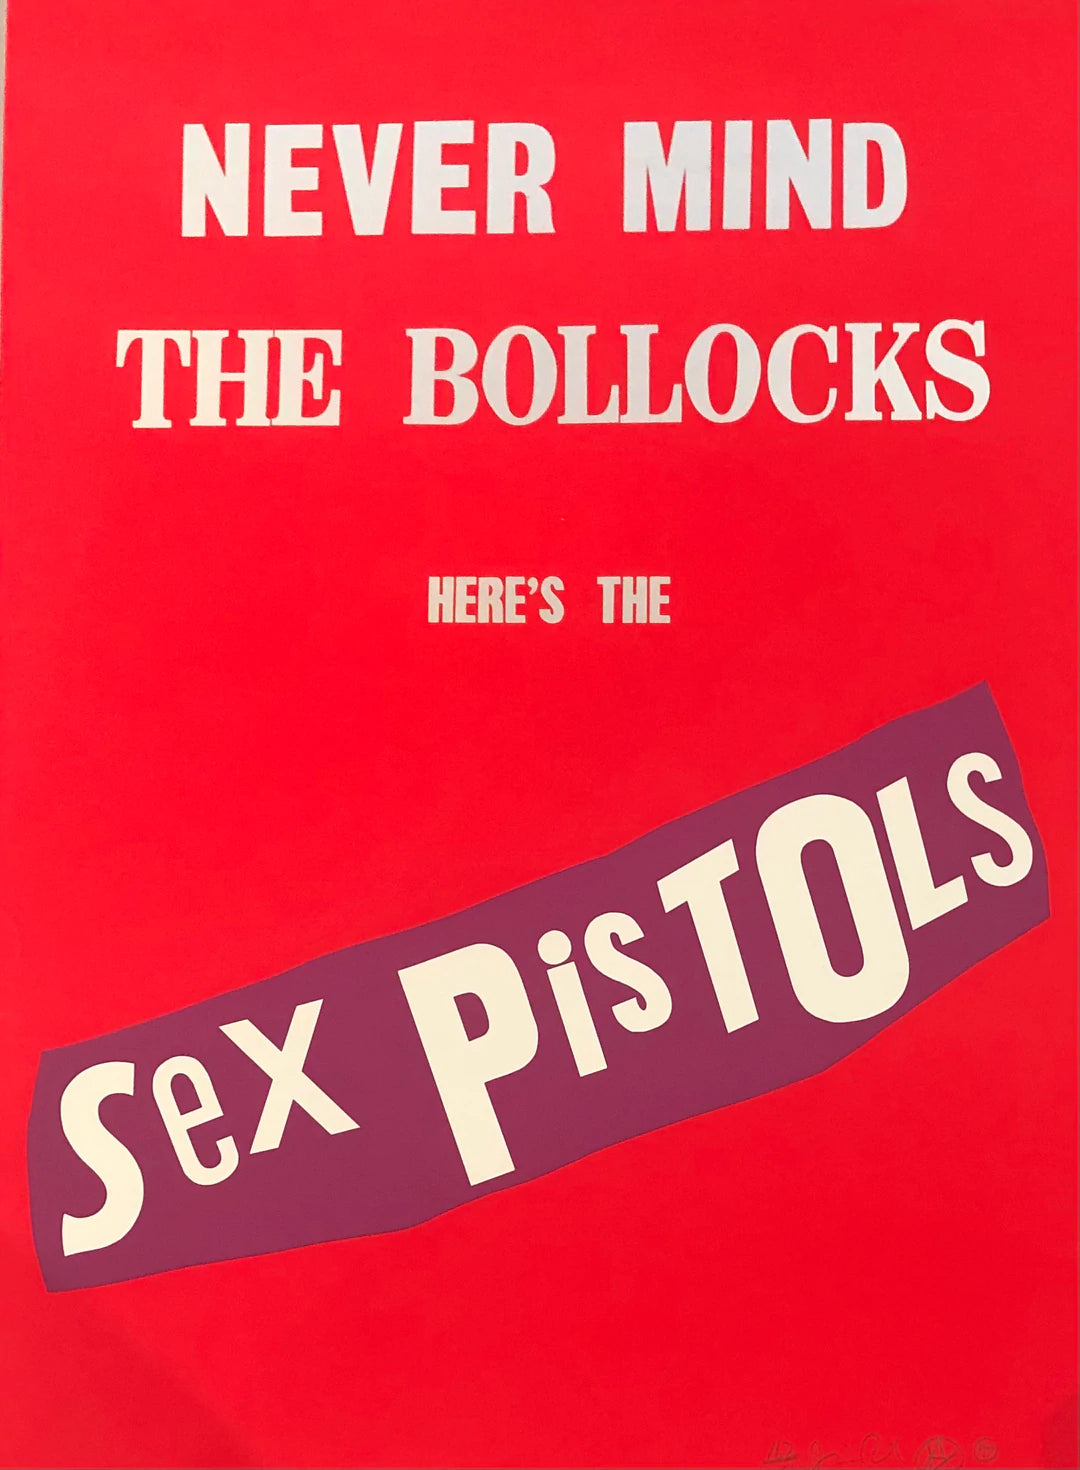 Never Mind The Bollocks (Red Colourway) - Smolensky Gallery